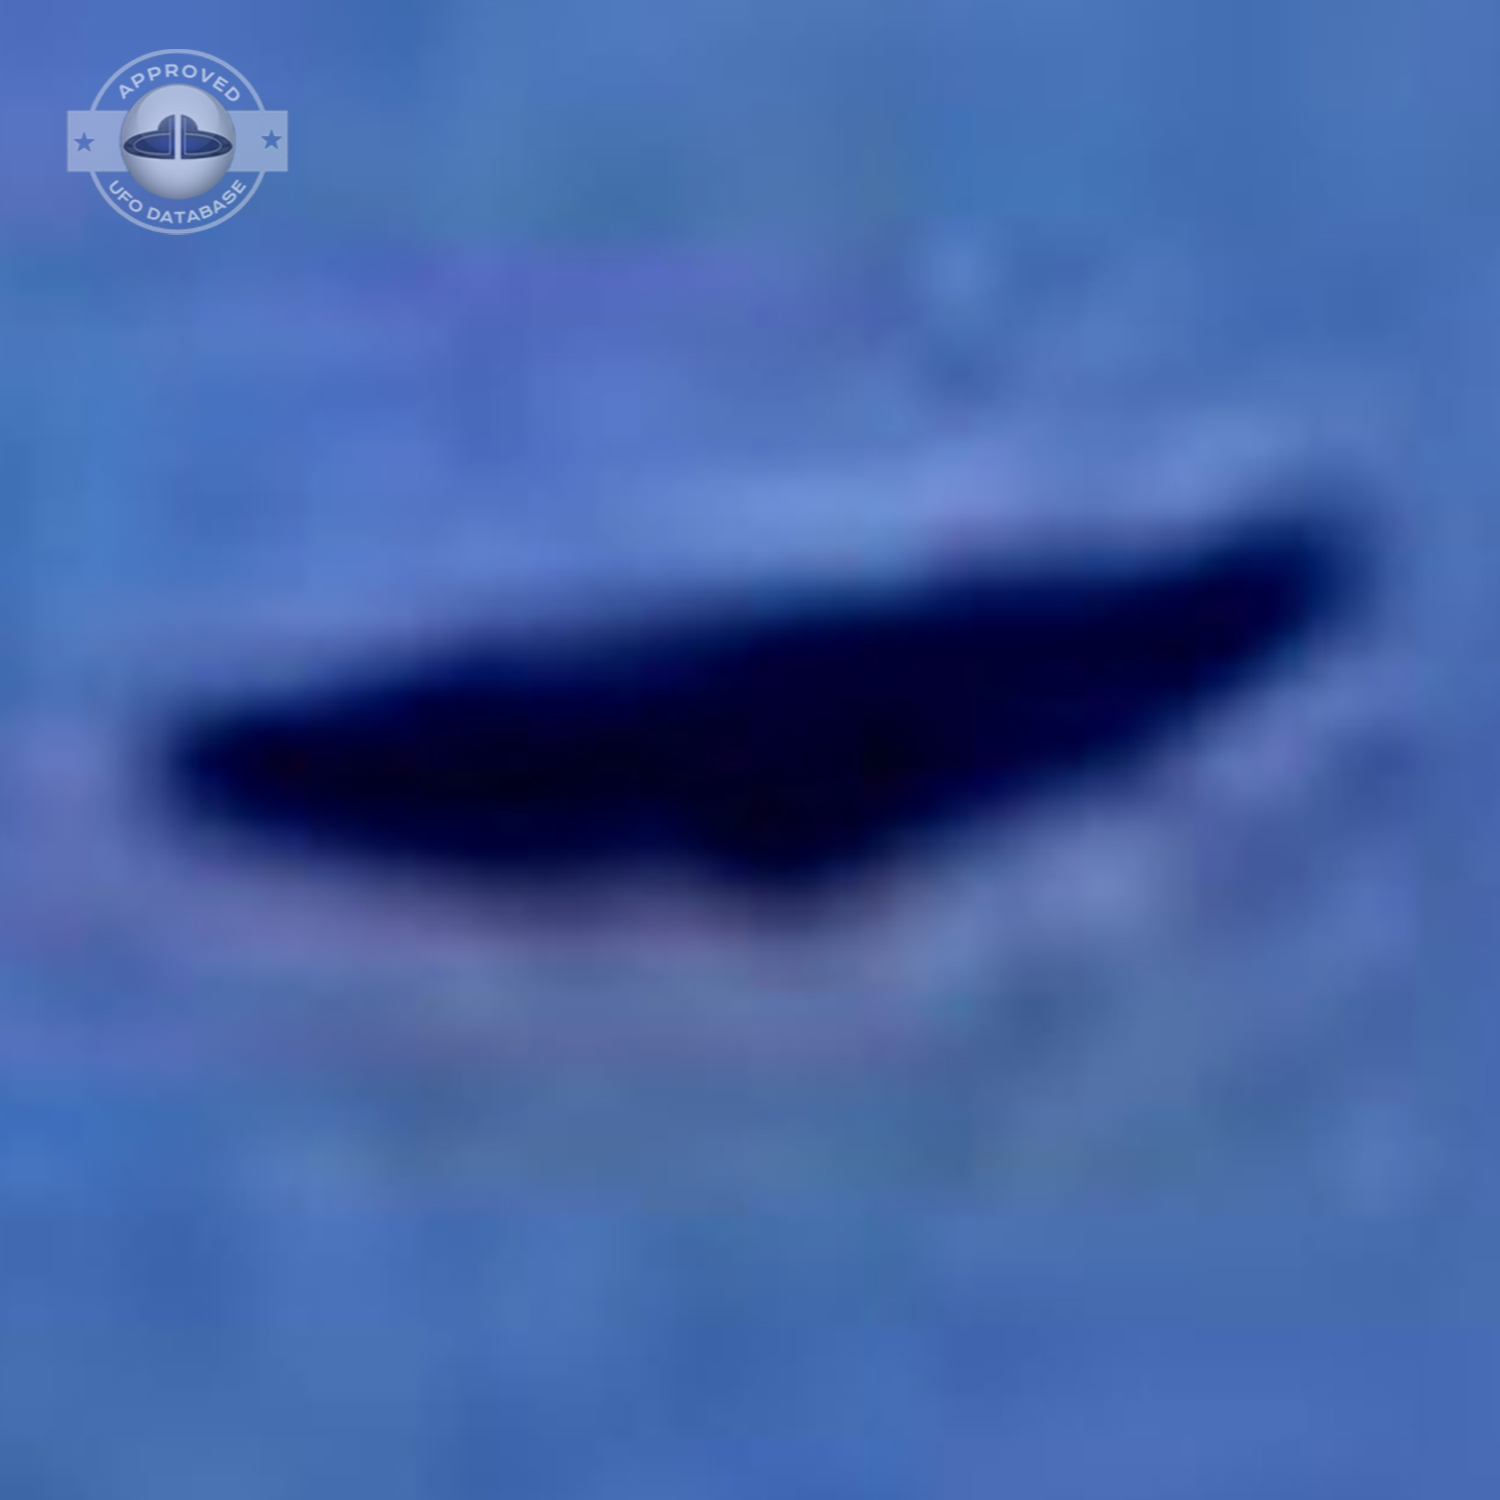 UFO seen over the famous Avebury stone circle region in Wiltshite UFO Picture #29-4